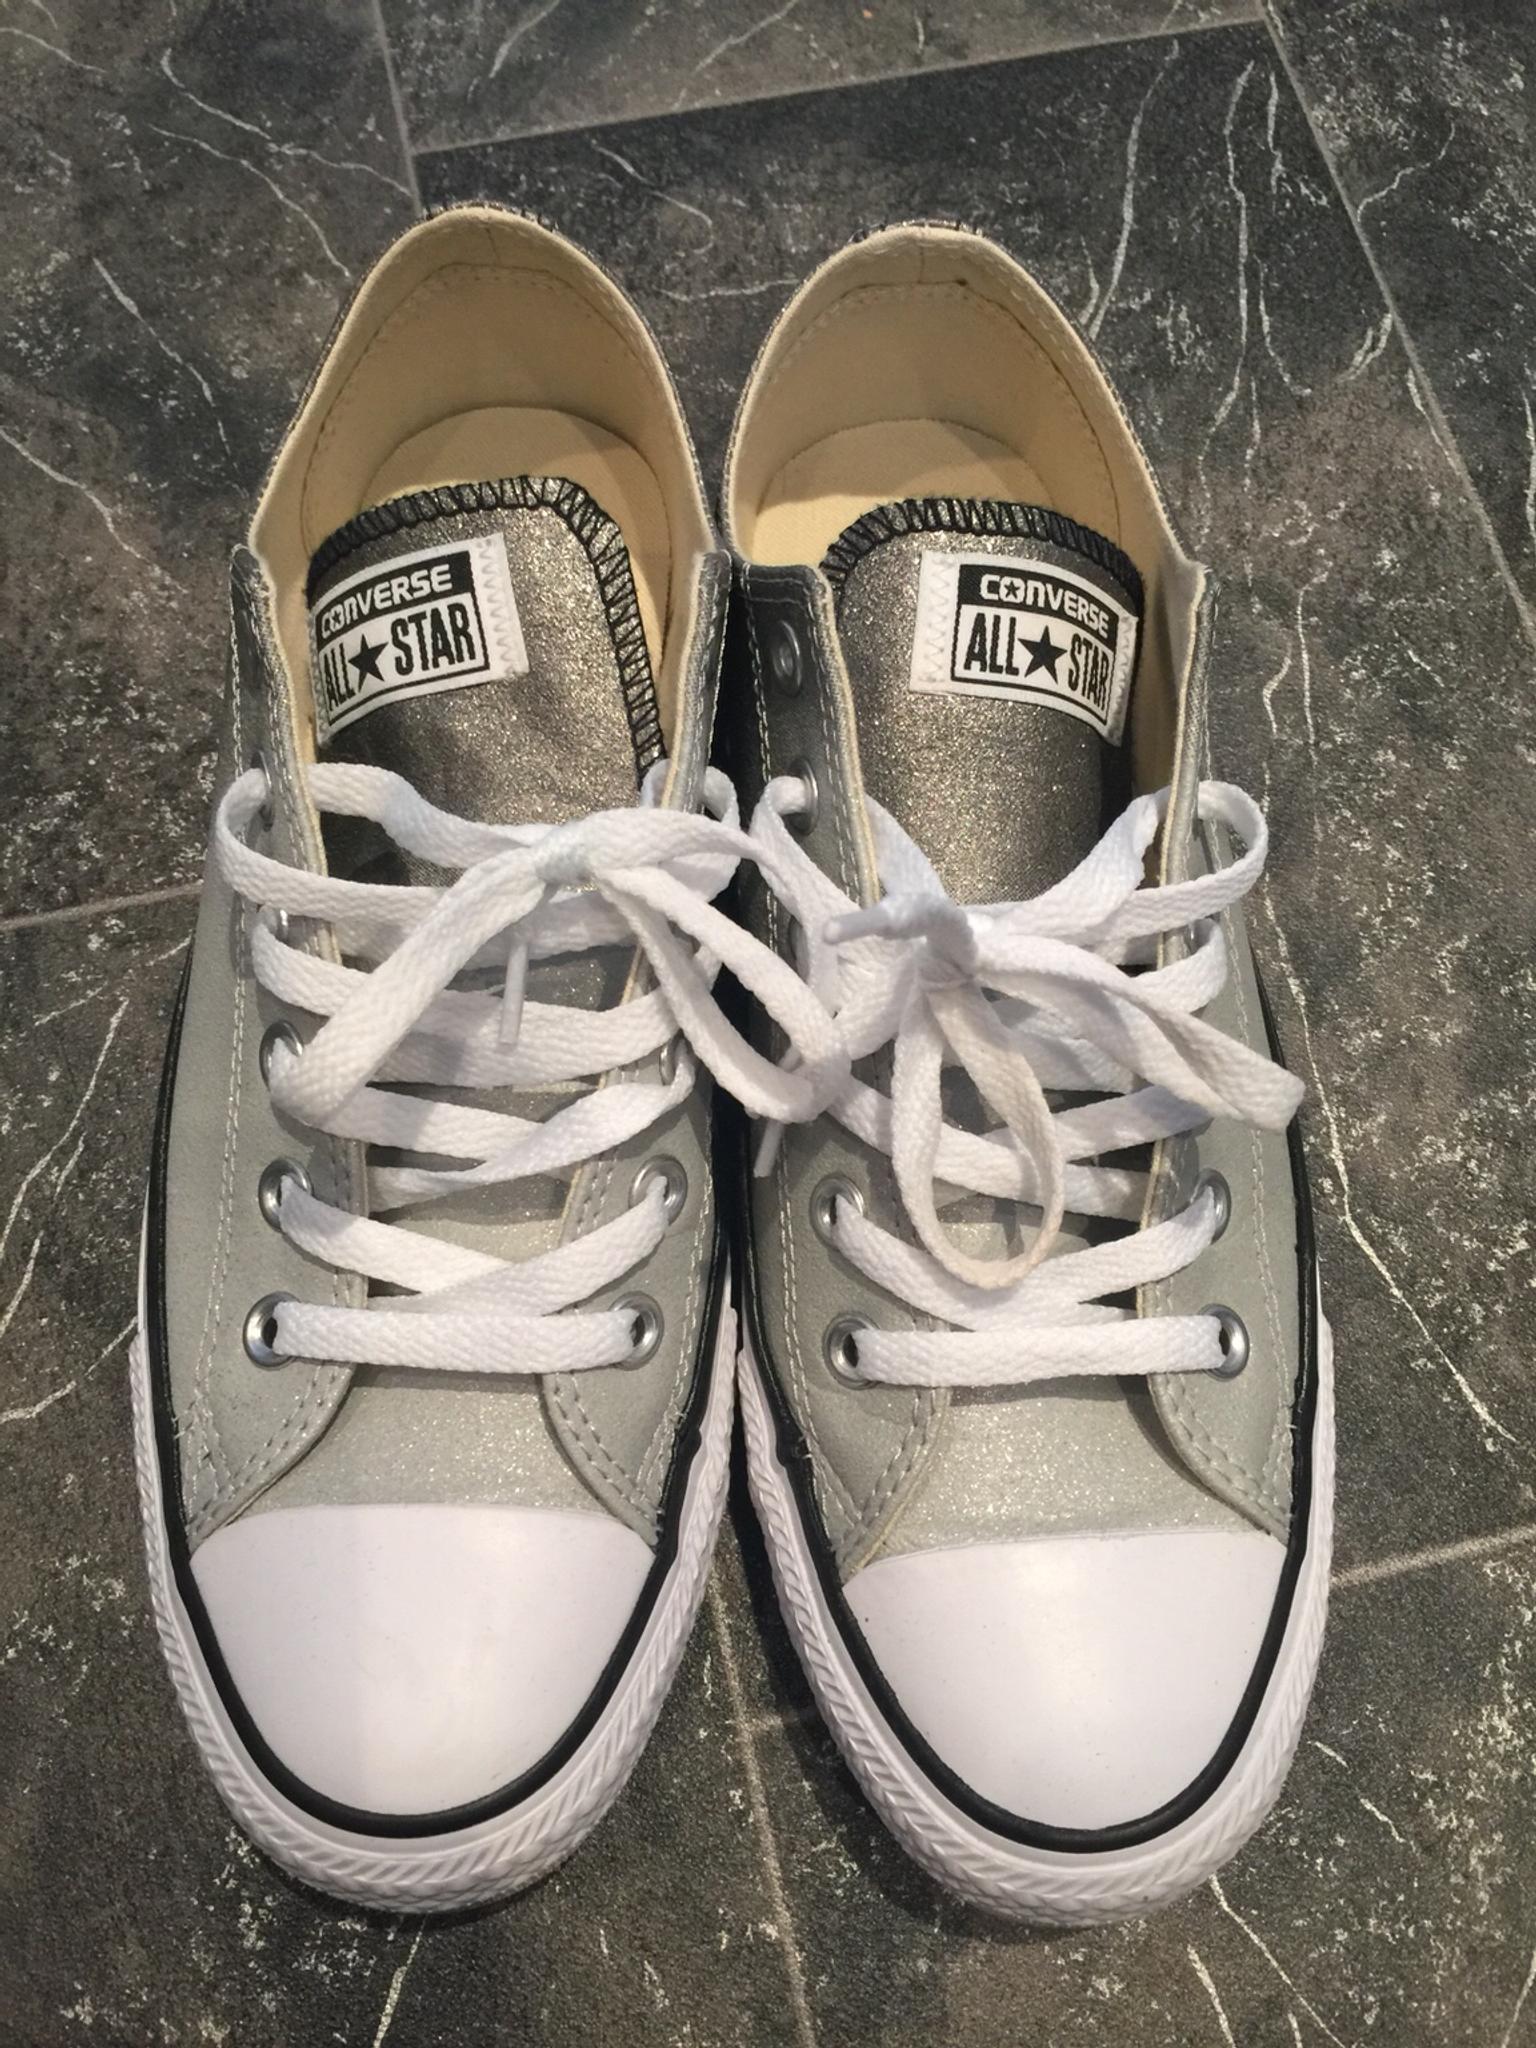 converse size 6 grey